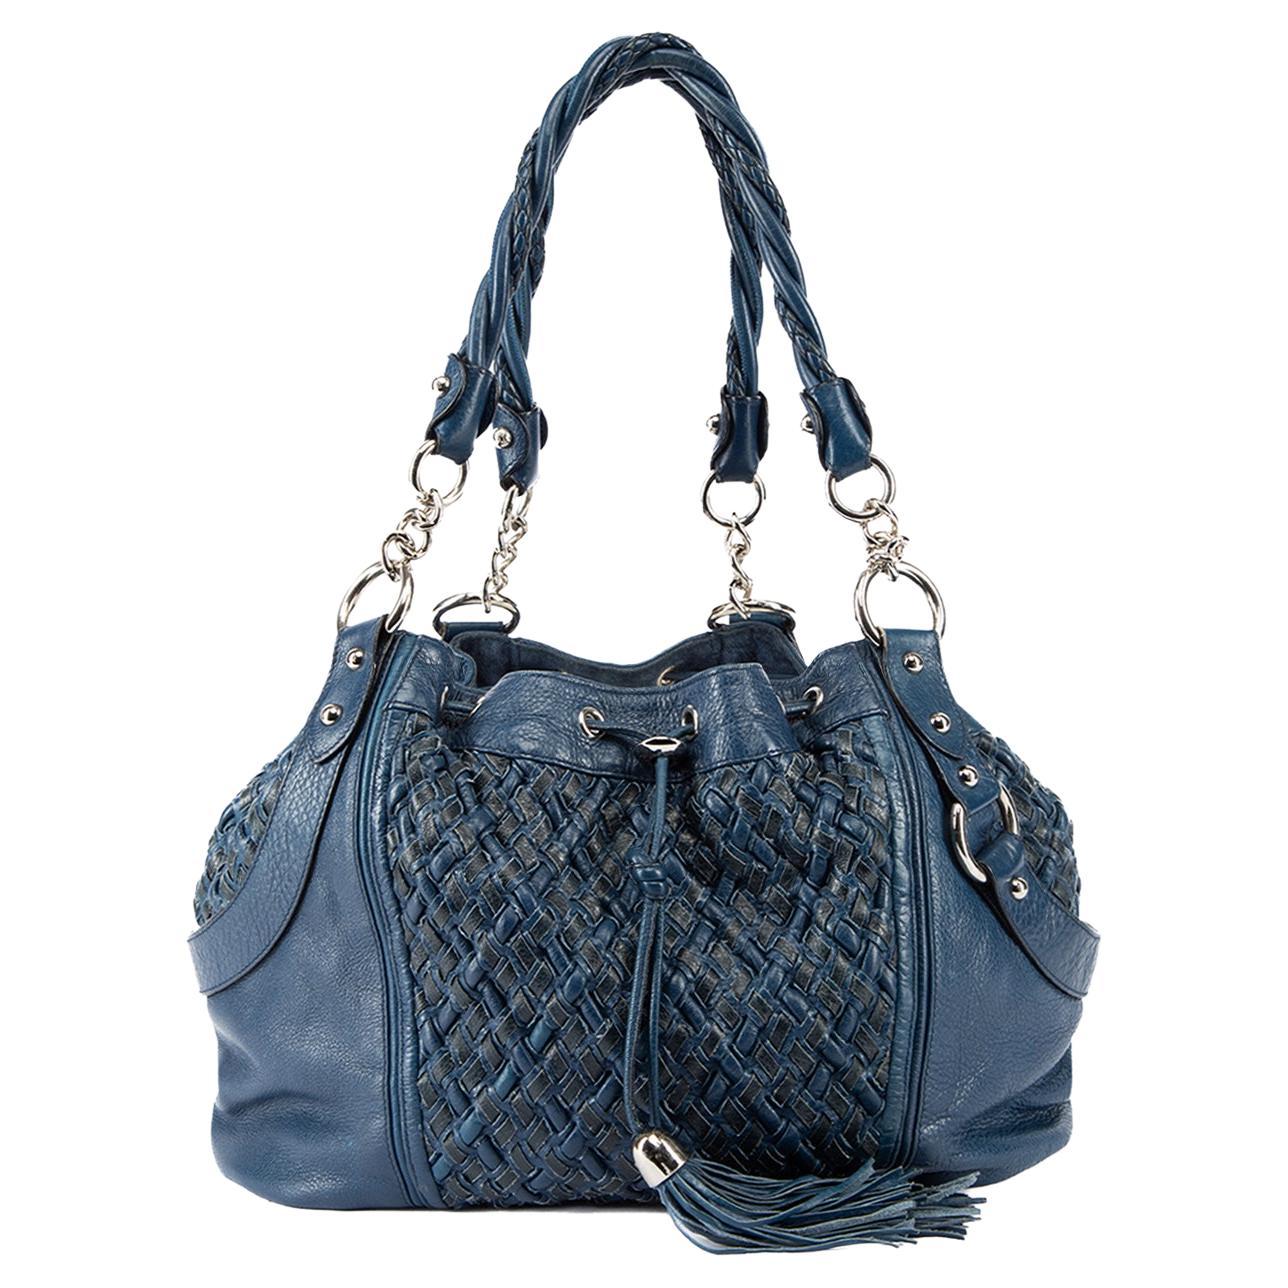 Pre-Loved Zac Posen Women's Blue Leather Woven Shoulder Bag